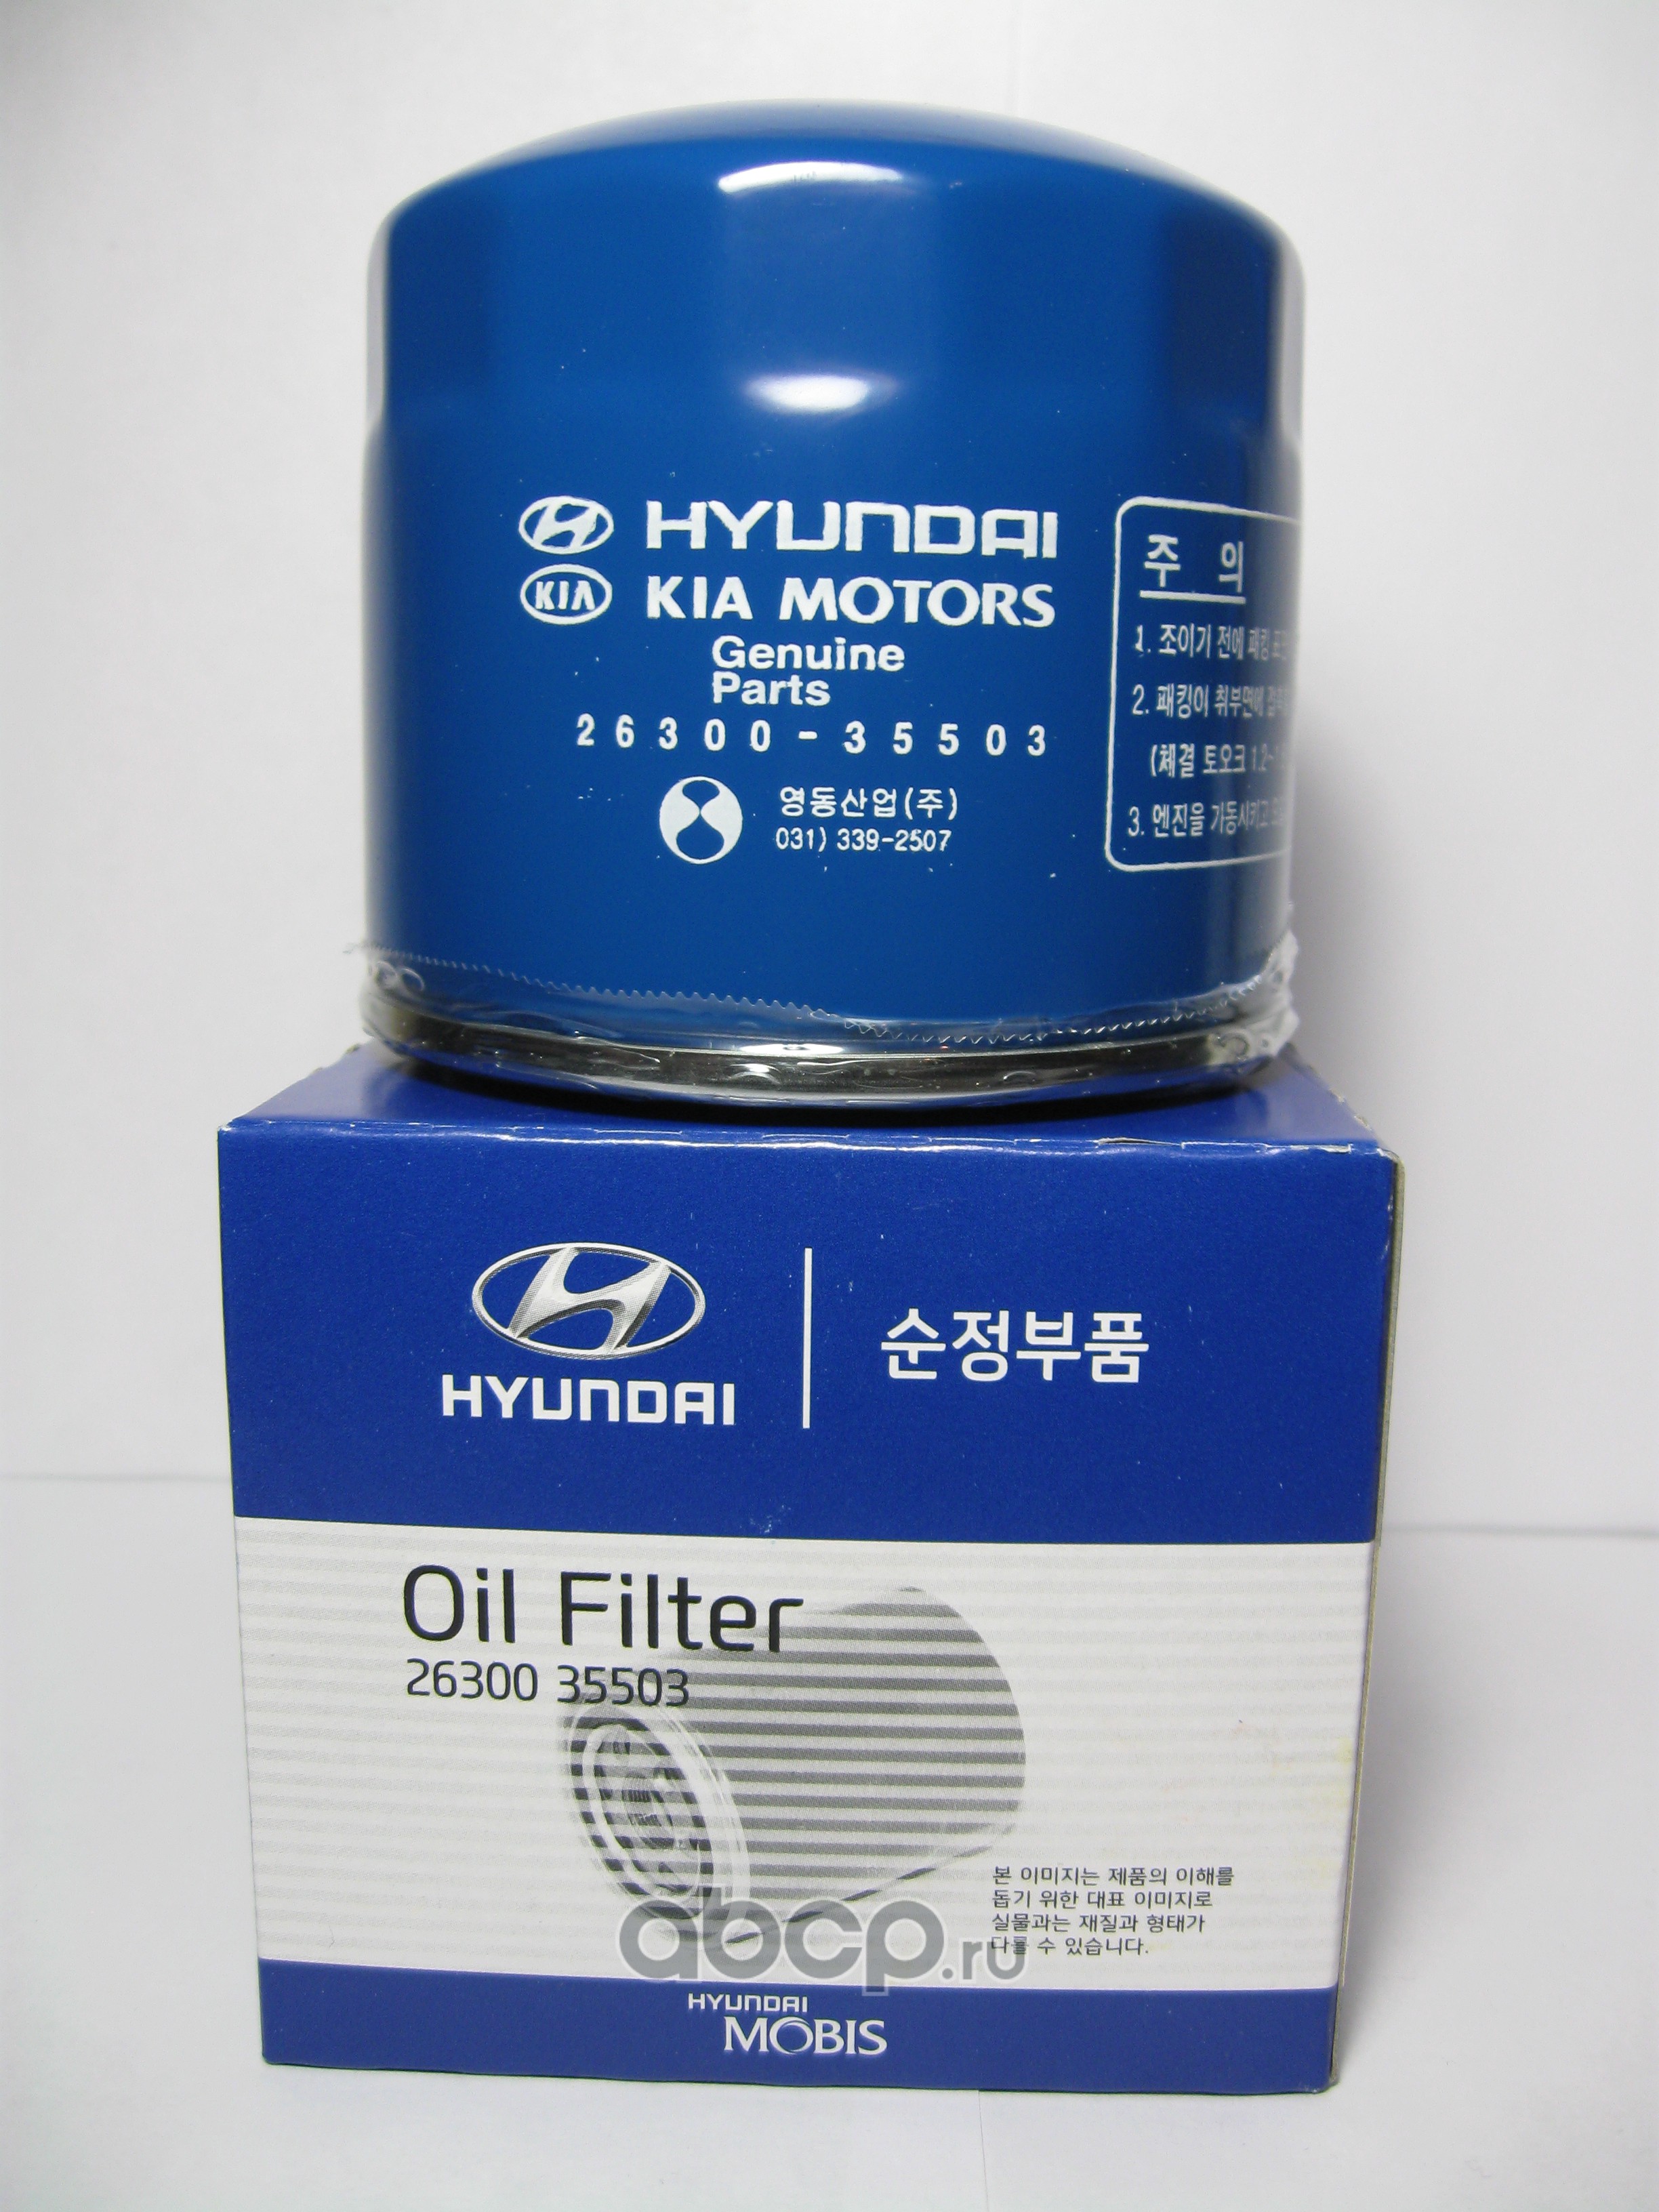 Hyundai kia производитель. Фильтр масляный Kia 2630035504. 2630035503 Hyundai/Kia. Фильтр масляный Киа Рио 1.4 артикул. Фильтр масляный Хендай Солярис 1.6 оригинал артикул.